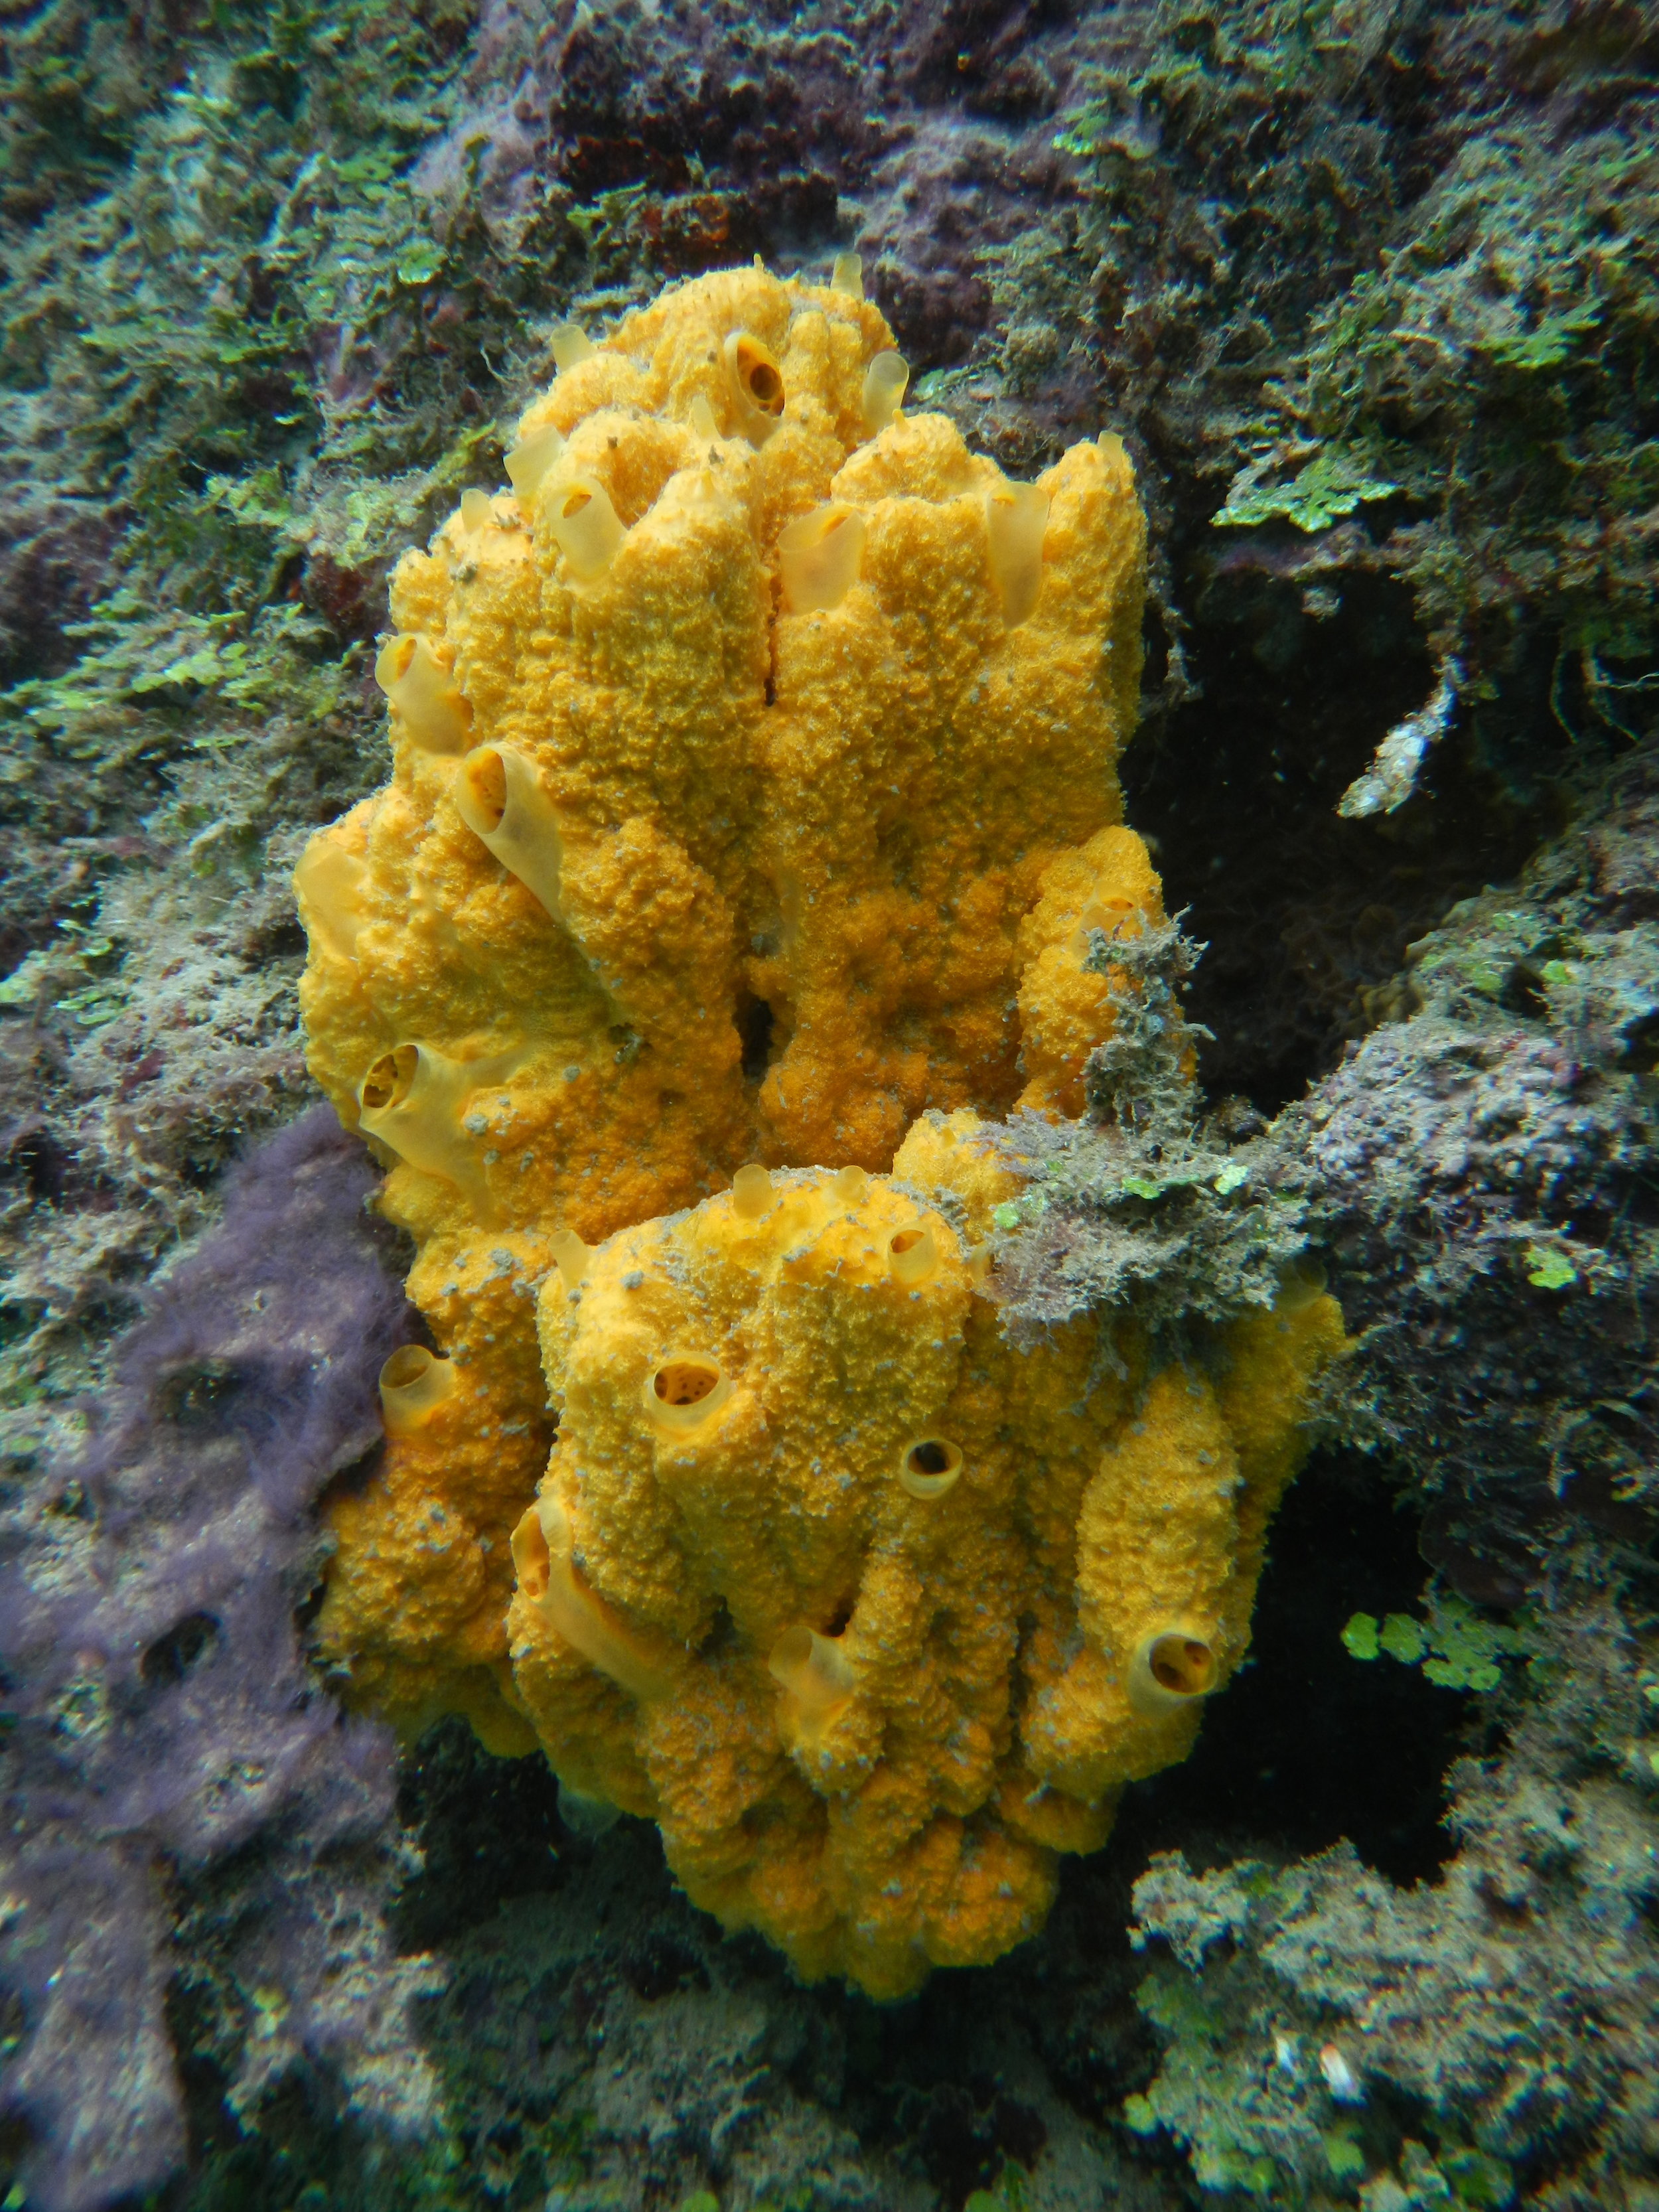 Another Polynesian sponge